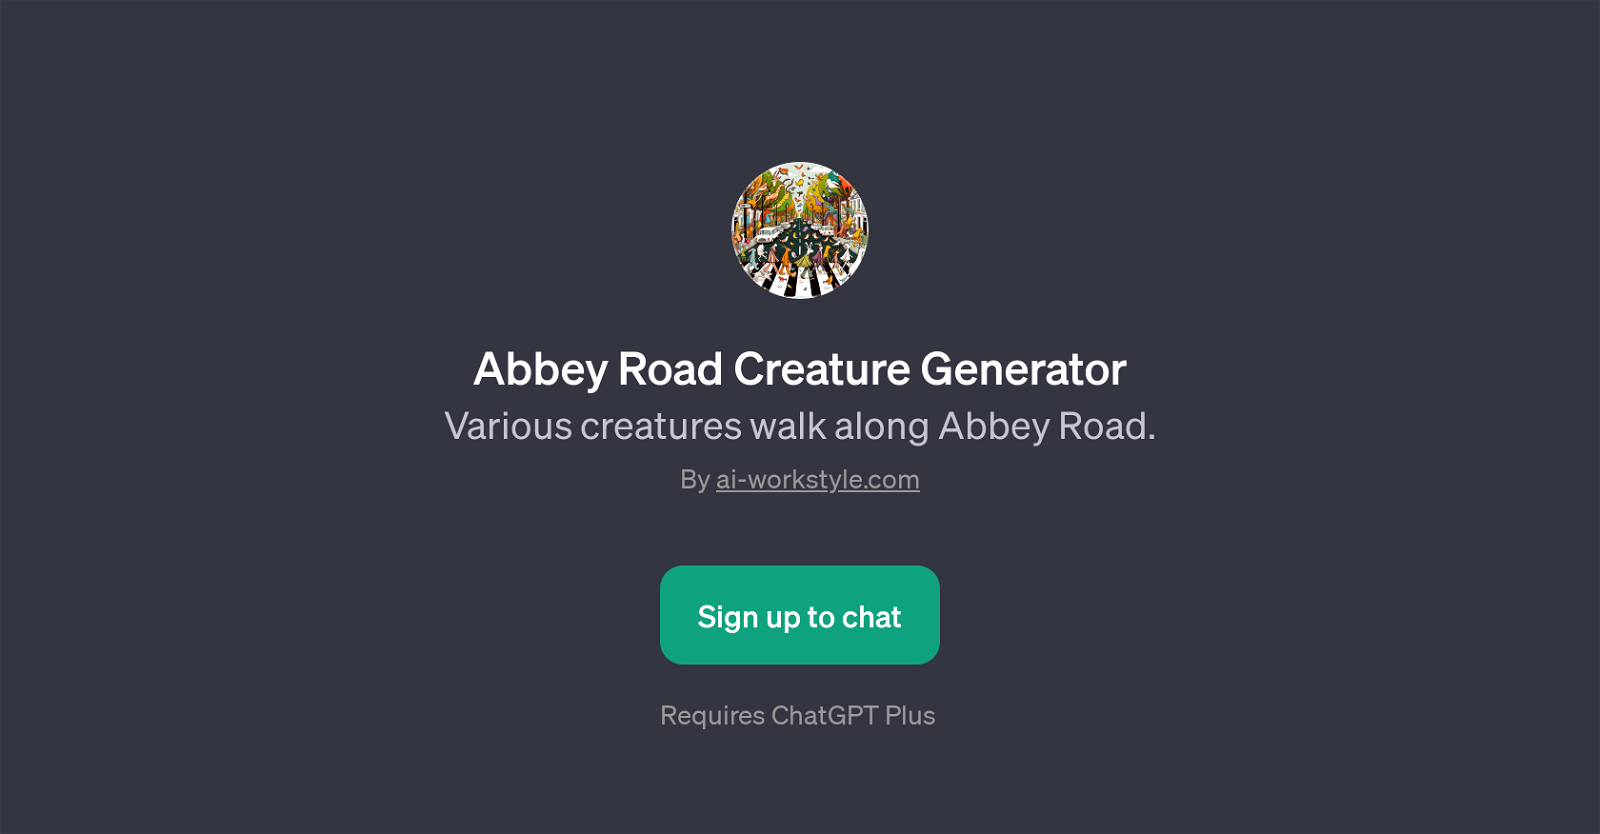 Abbey Road Creature Generator website